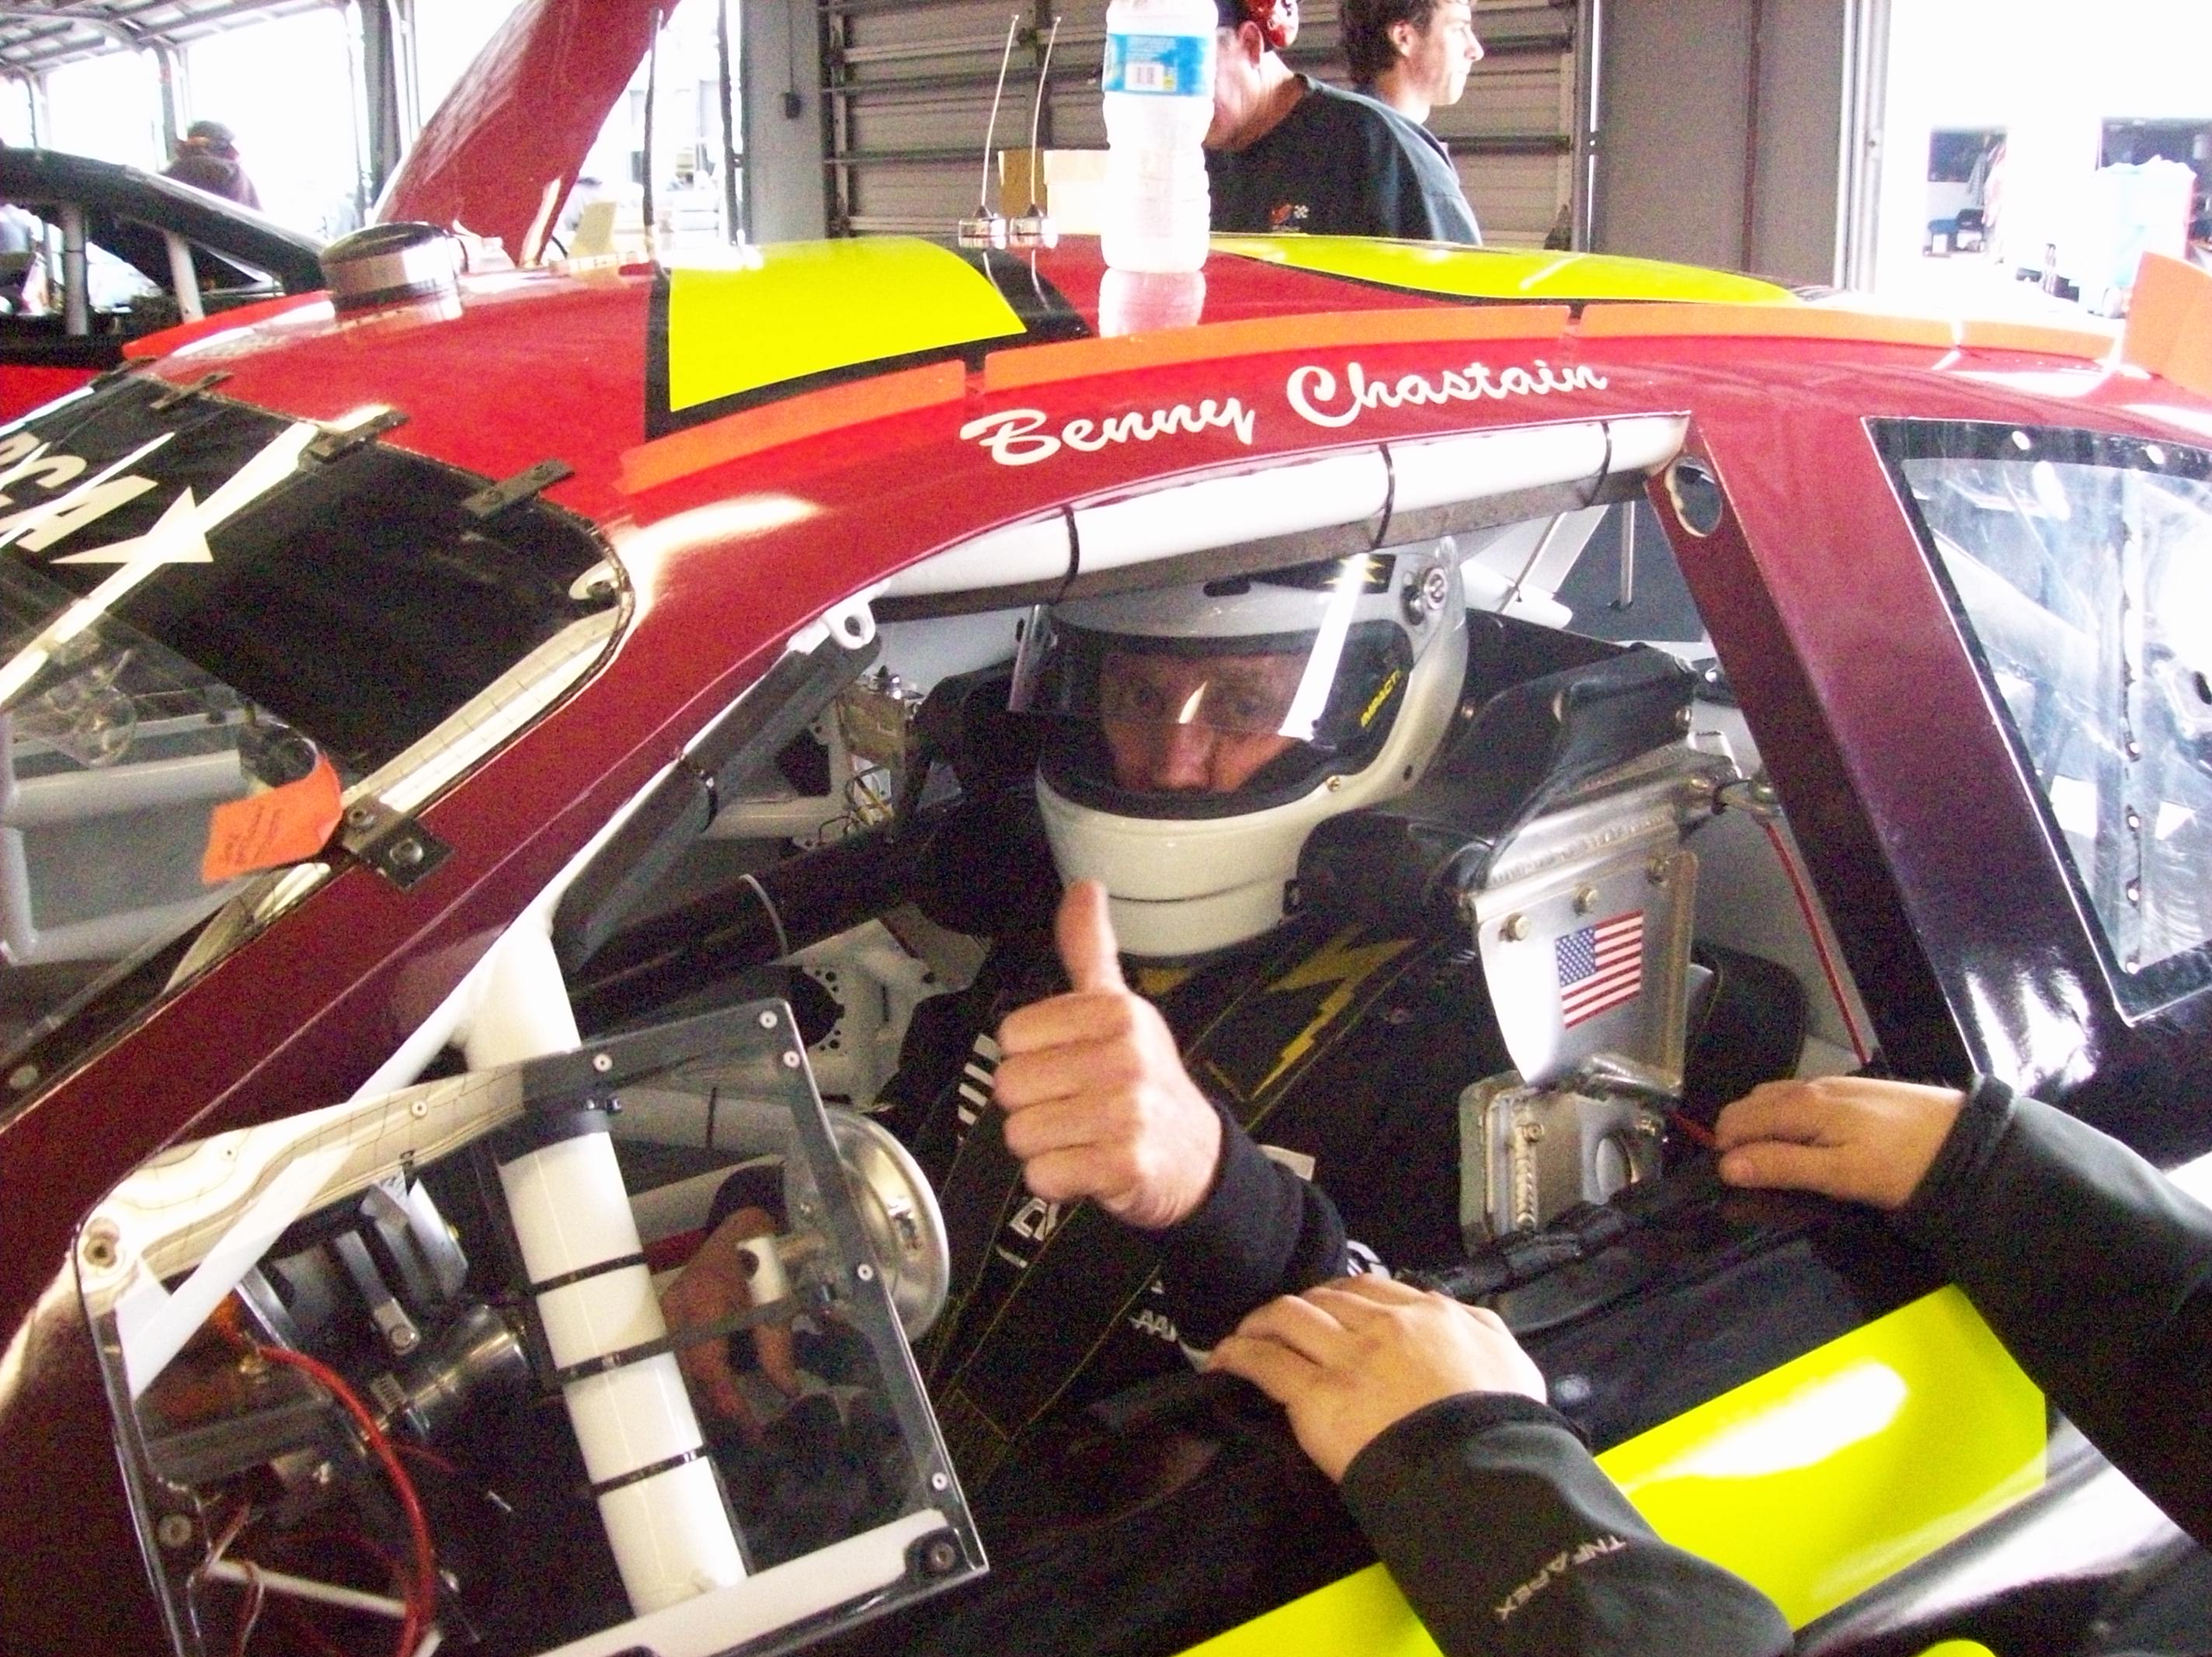 Benny Chastain prepares for practice run at Daytona International Speedway